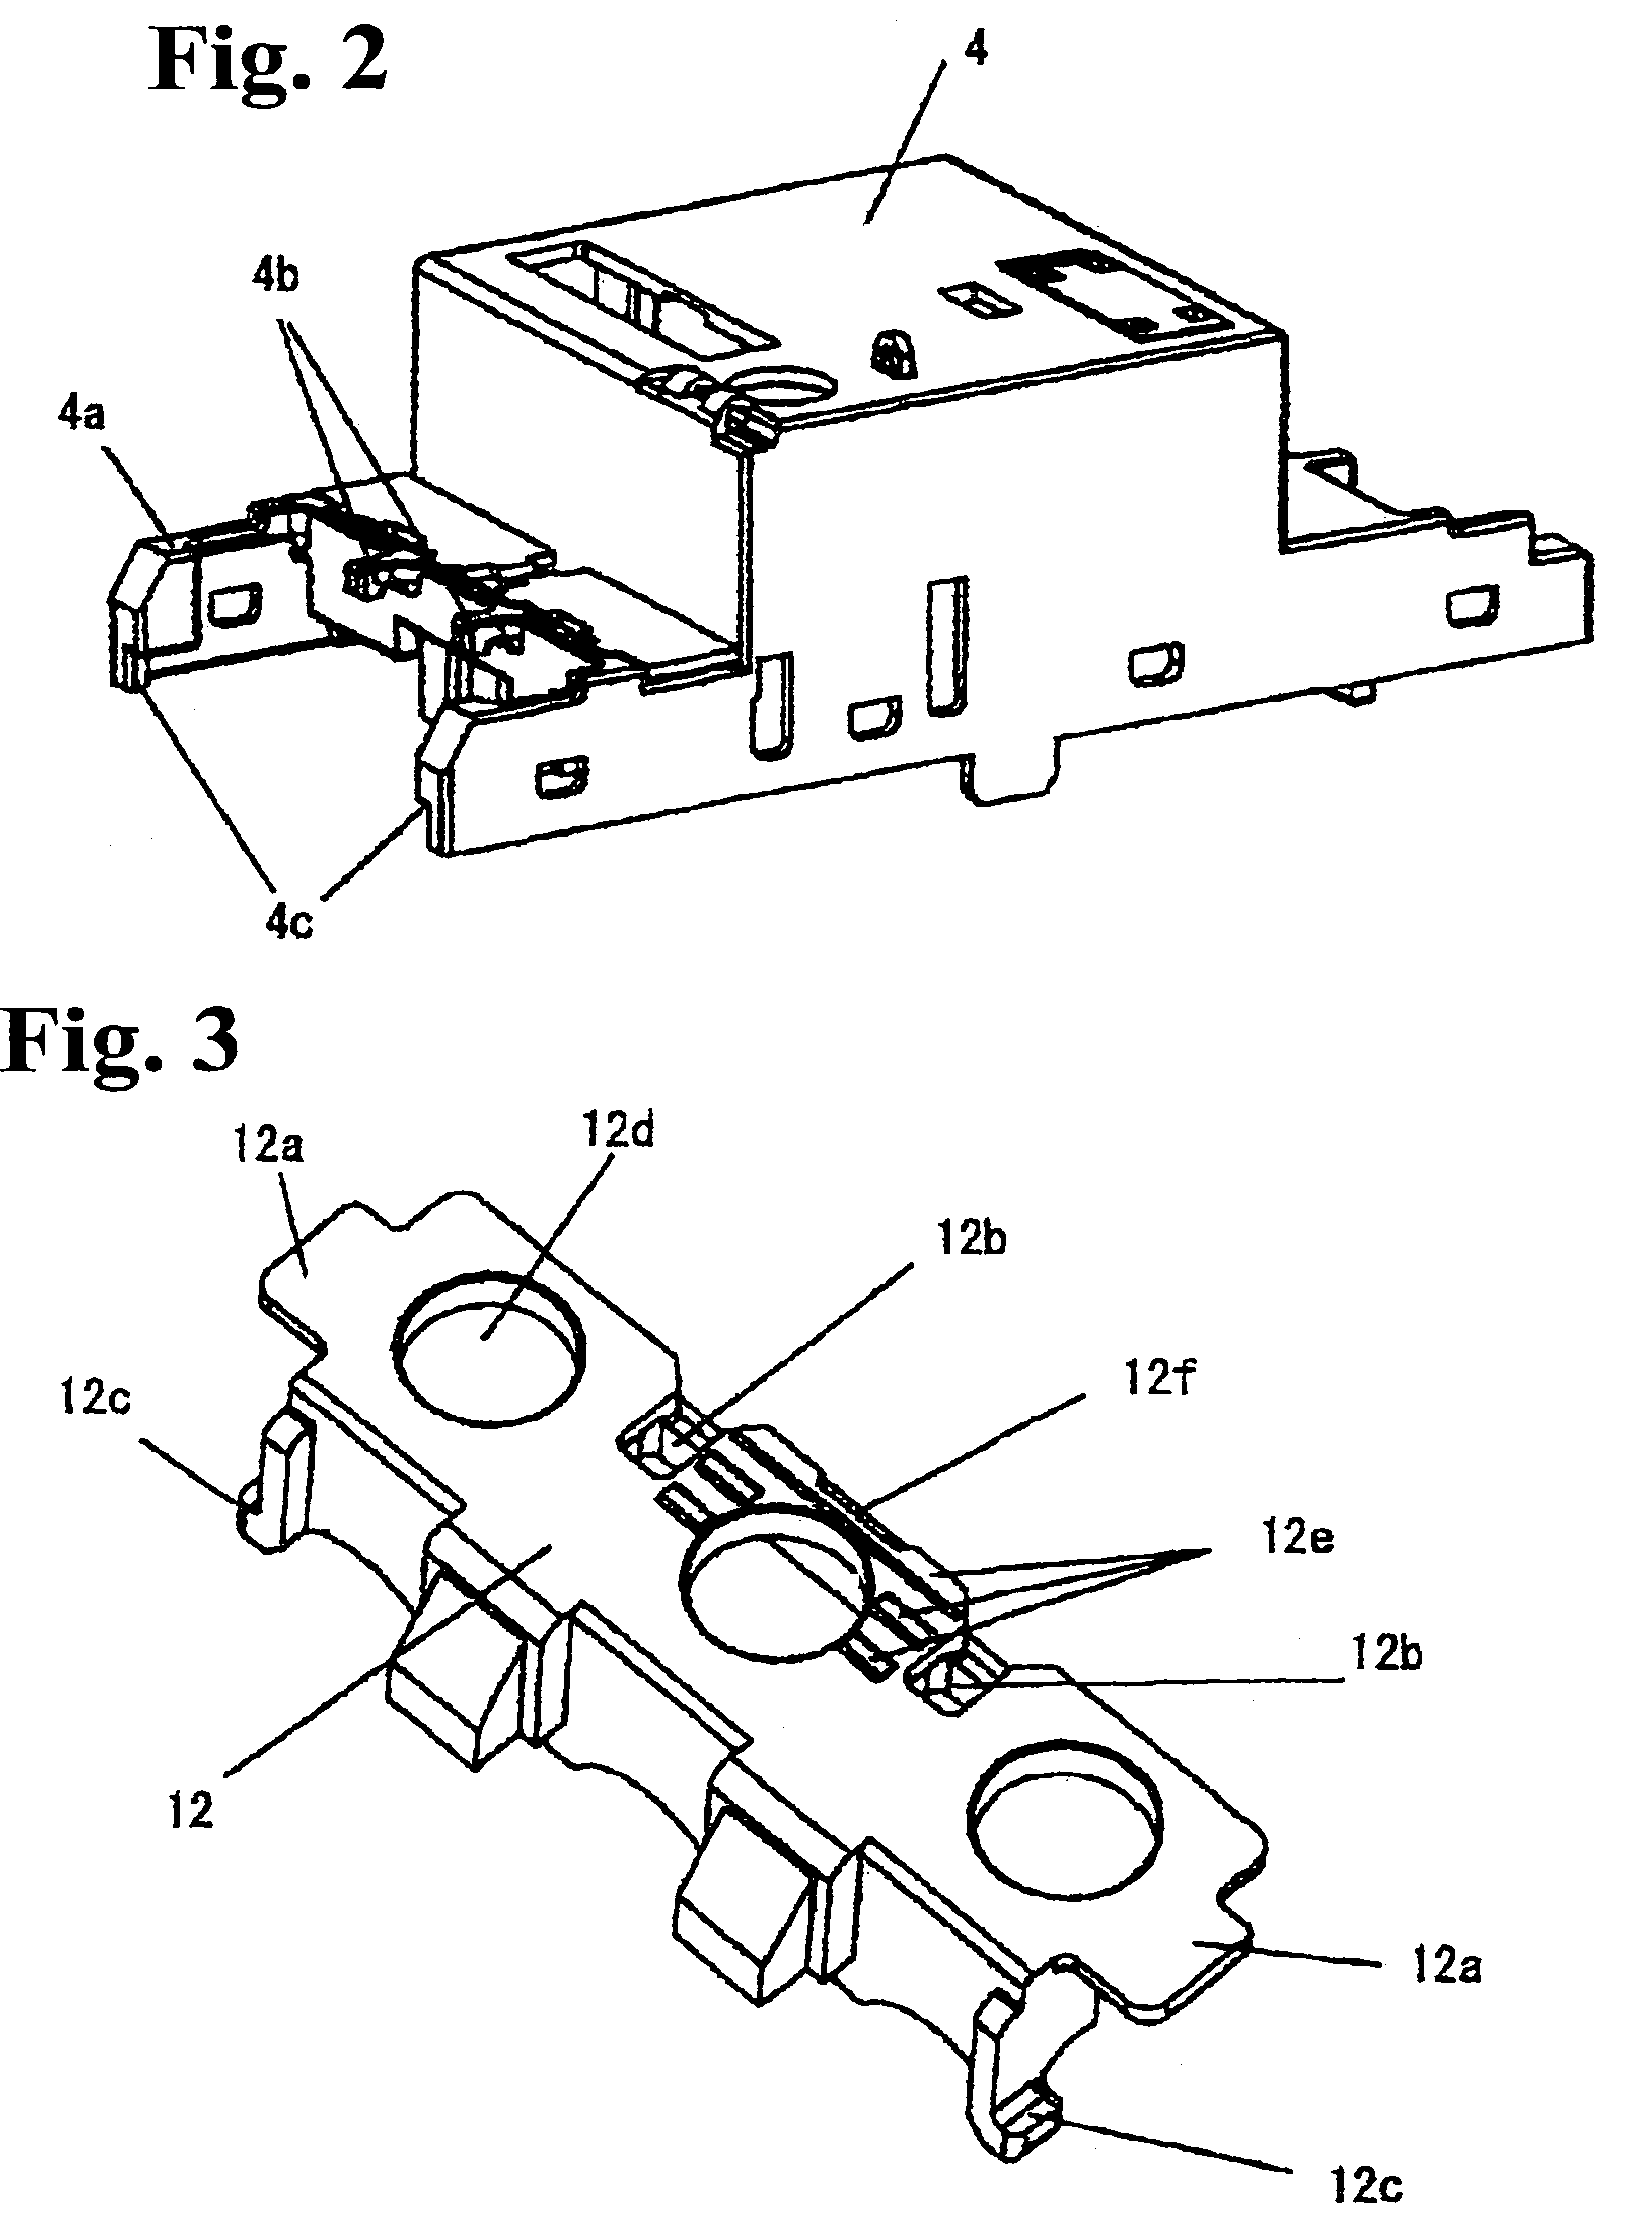 Circuit breaker and terminal cover